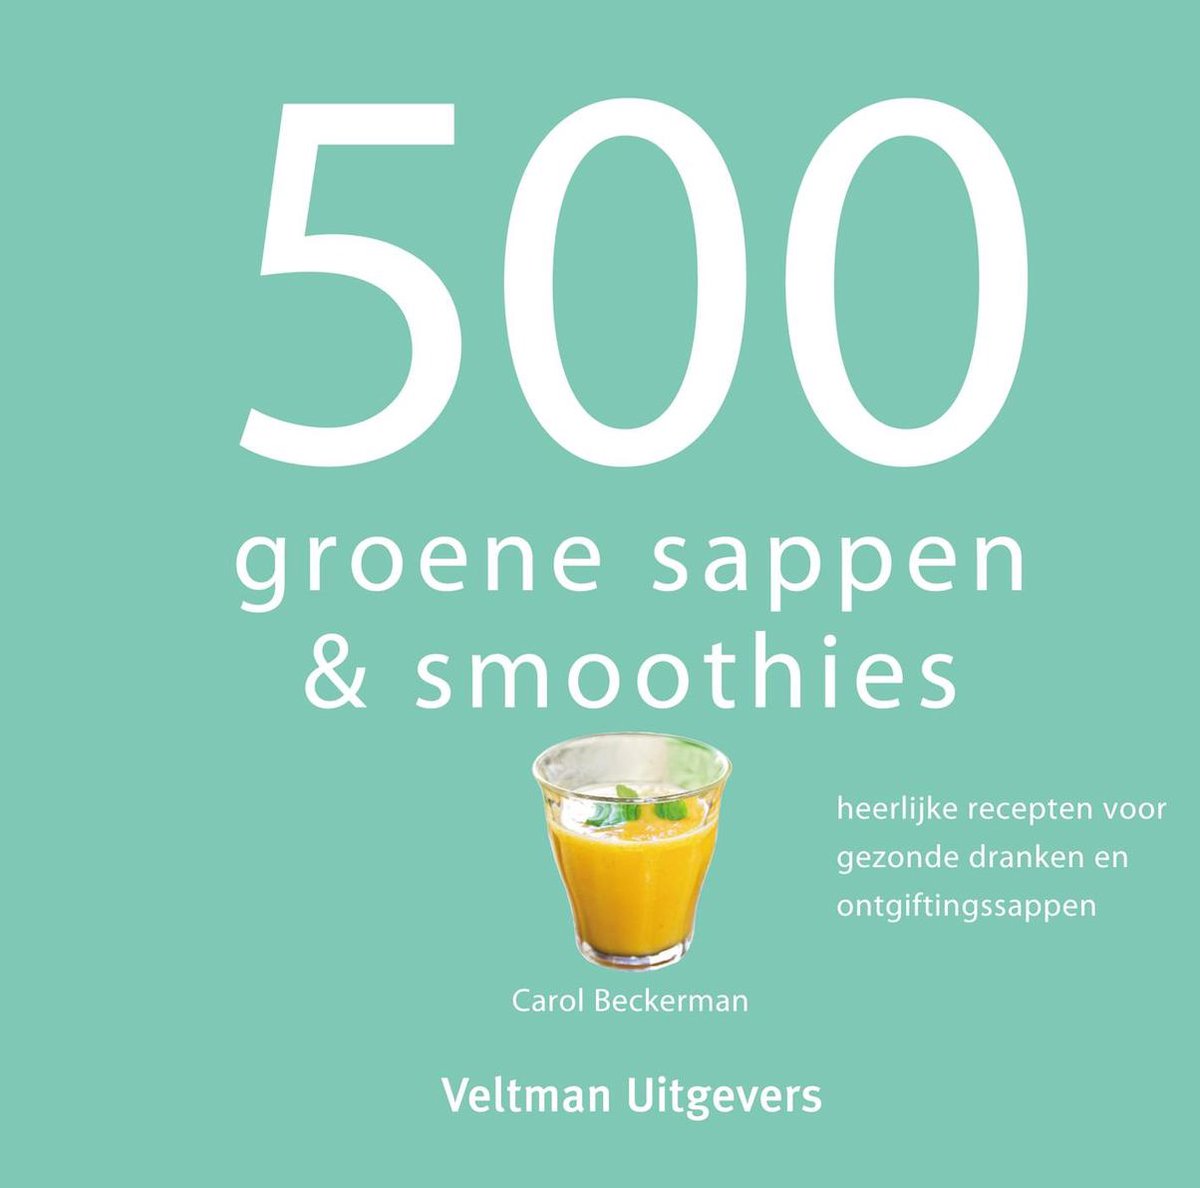 500 groene sappen & smoothies - Carol Beckerman